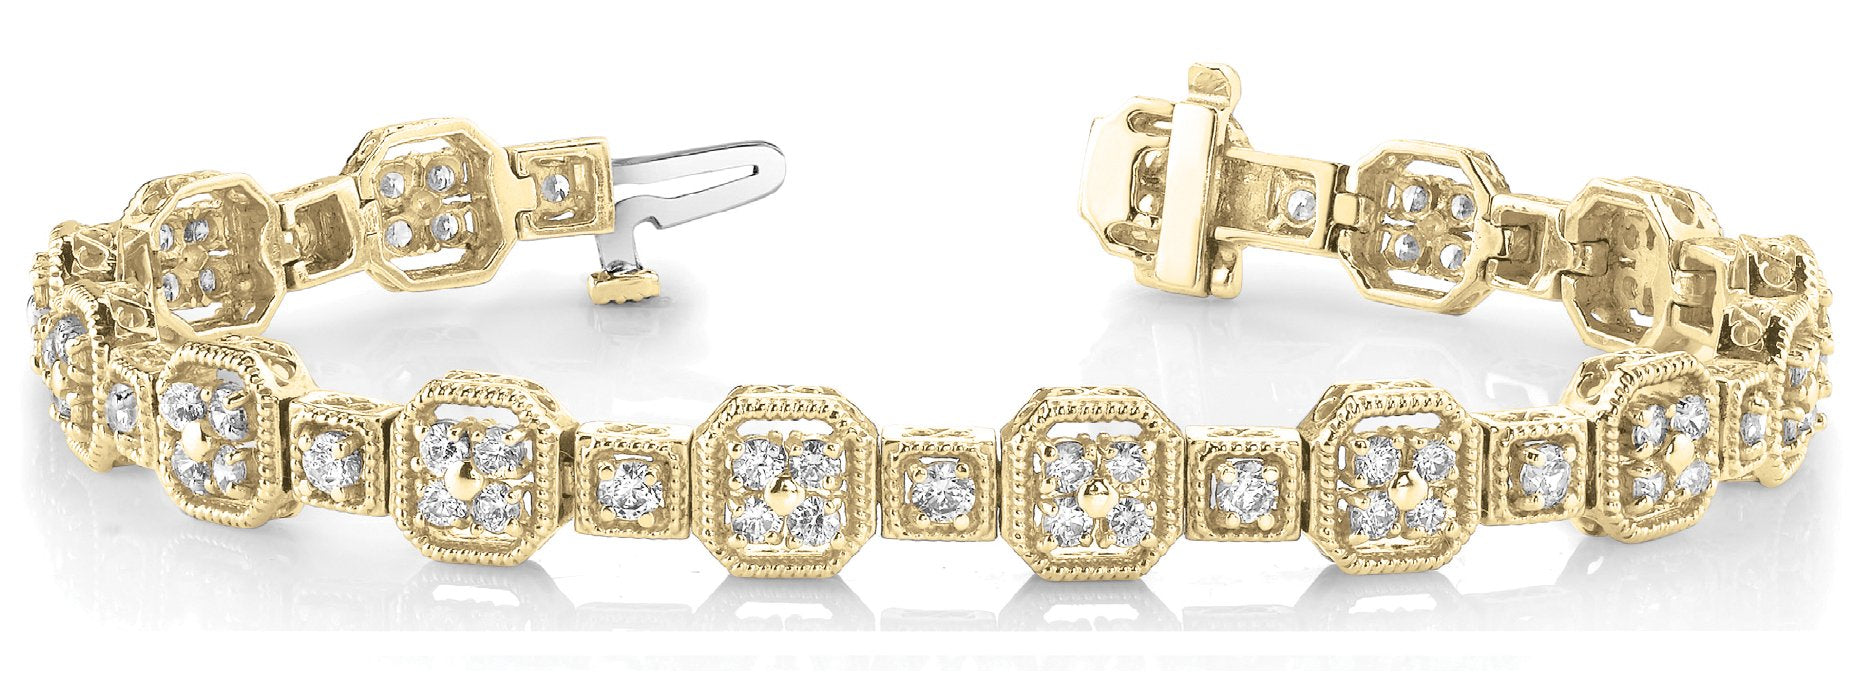 Fancy Diamond Bracelet Ladies 3.97ct tw - 14kt Yellow Gold